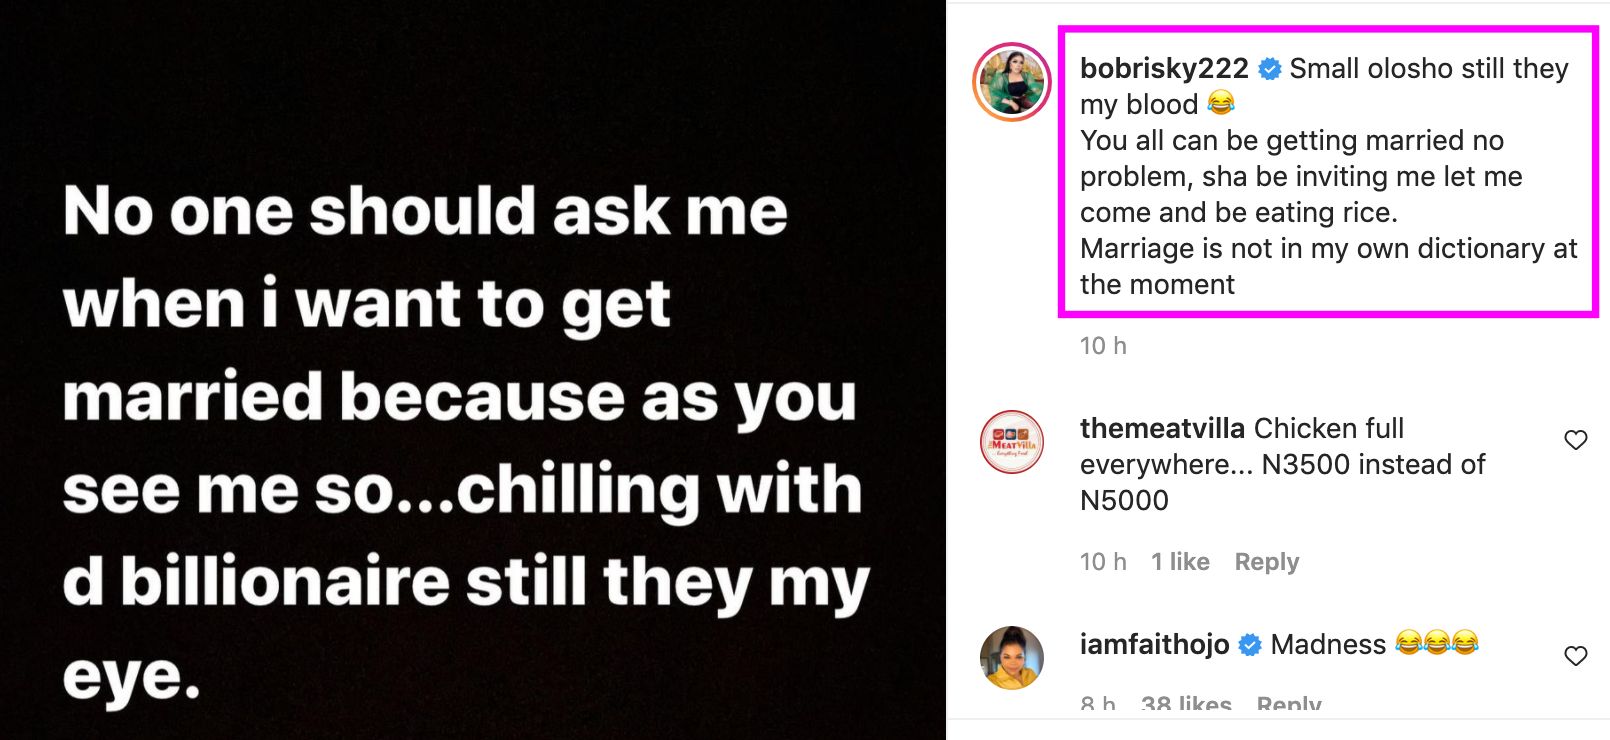 ‘Olosho Still They My Blood’, Bobrisky Speaks On Getting Married